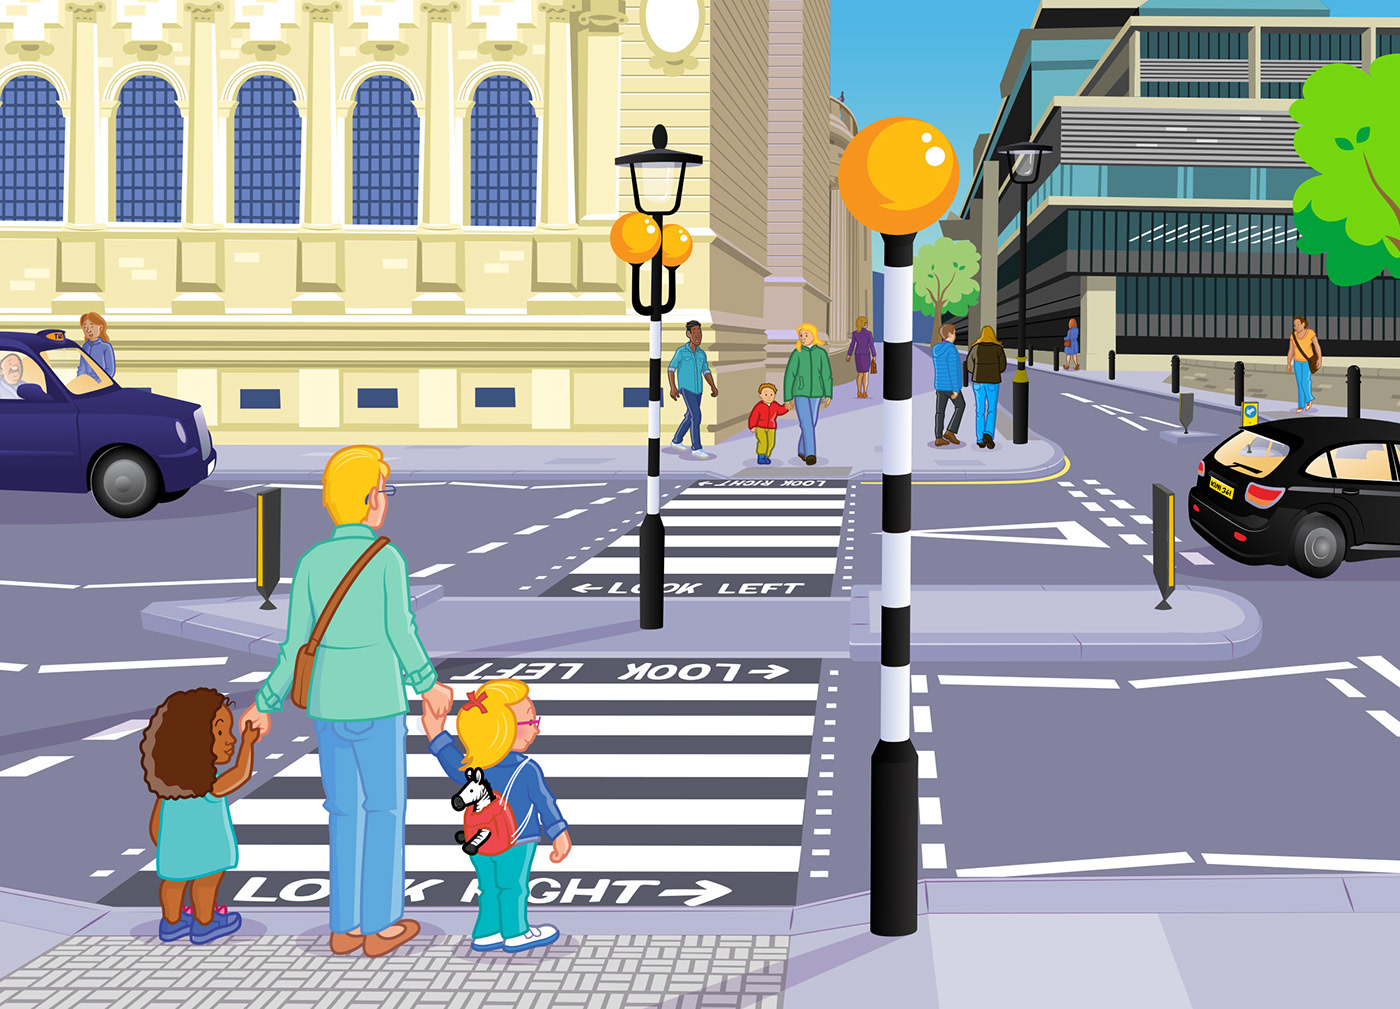 animation  ILLUSTRATION  Road Safety London children comic cartoon